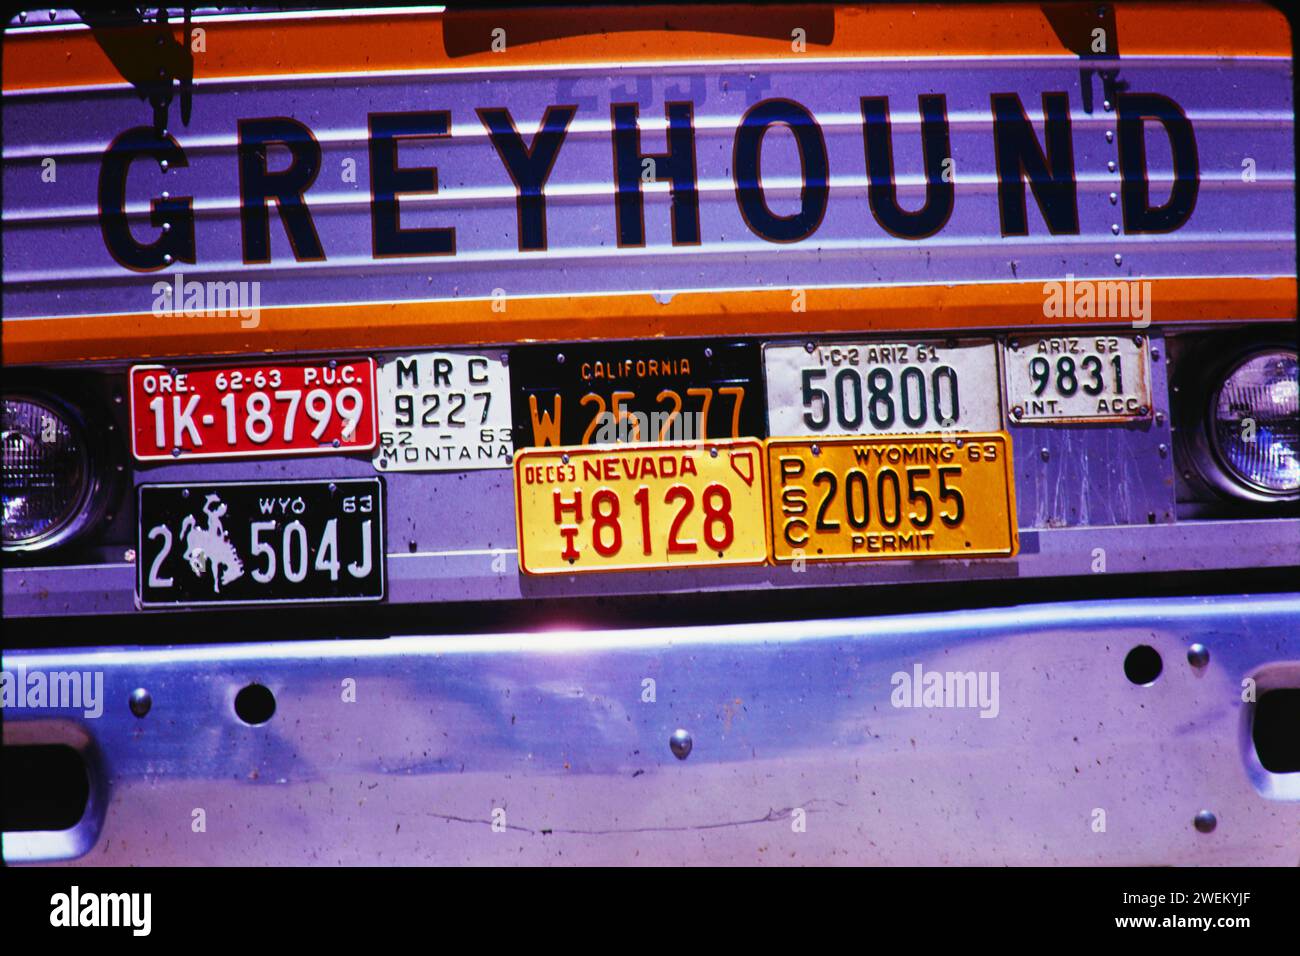 GREYHOUND Bus USA,20240101, Aufnahme ca. 1964, Symbolbild,GREYHOUND Bus *** GREYHOUND Bus USA,20240101, photo ca 1964, symbolic image,GREYHOUND Bus Stock Photo